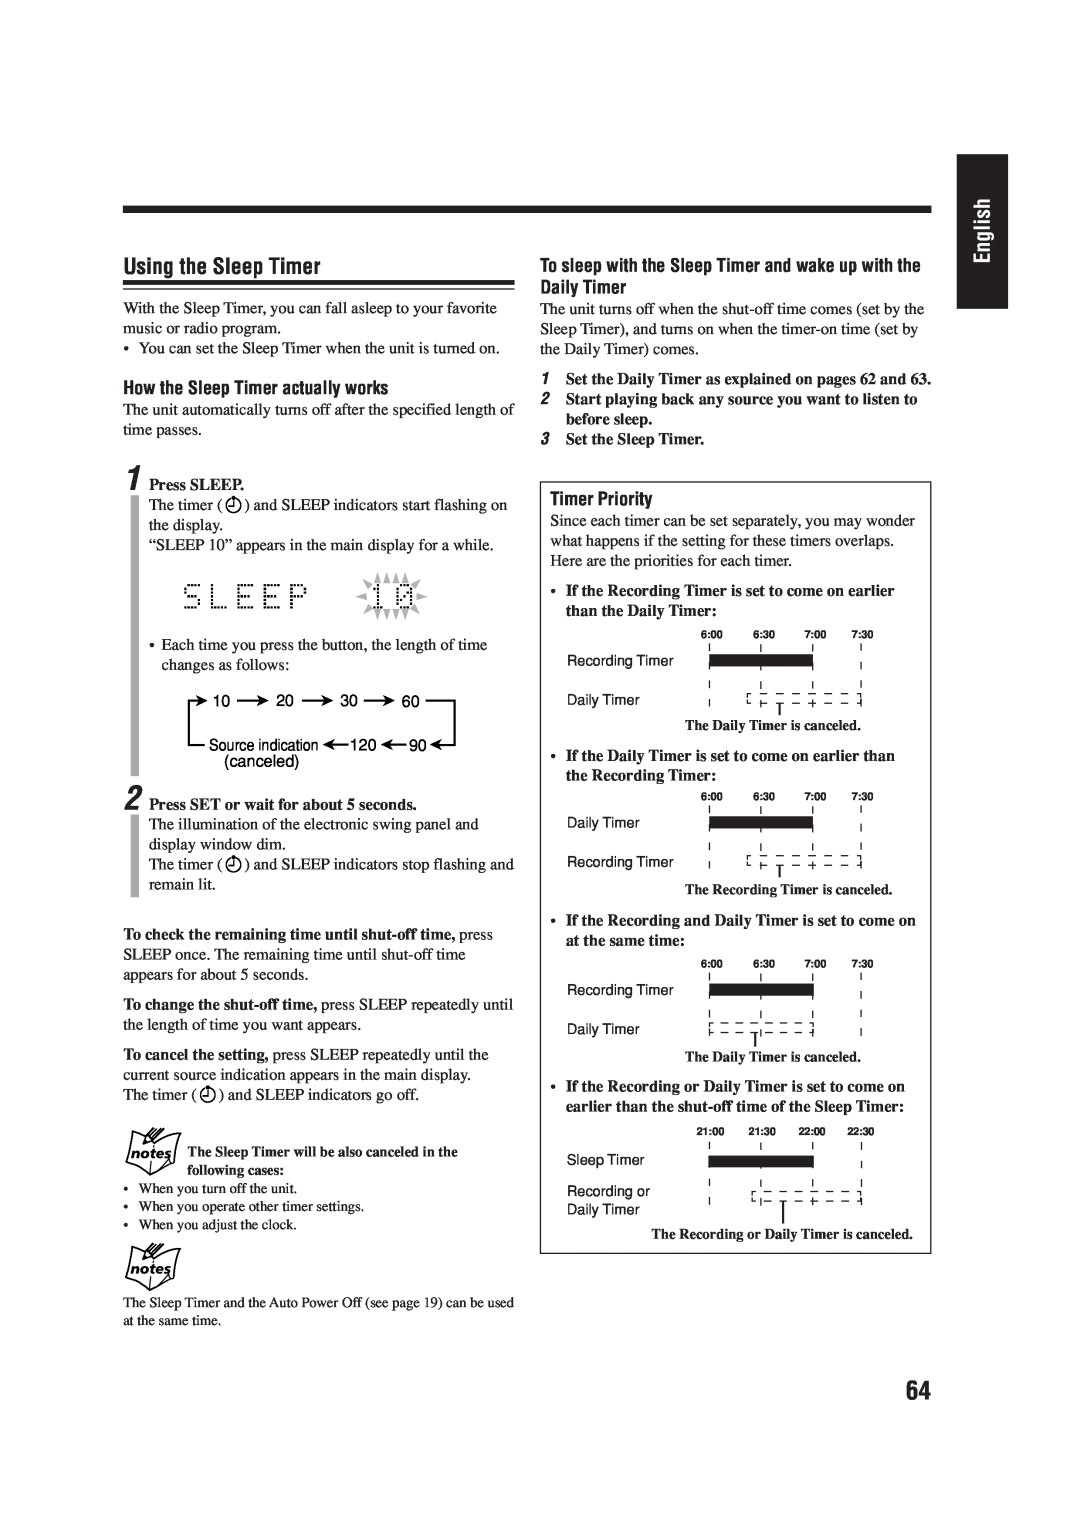 JVC LVT0954-007A manual Using the Sleep Timer, English, How the Sleep Timer actually works, Timer Priority 